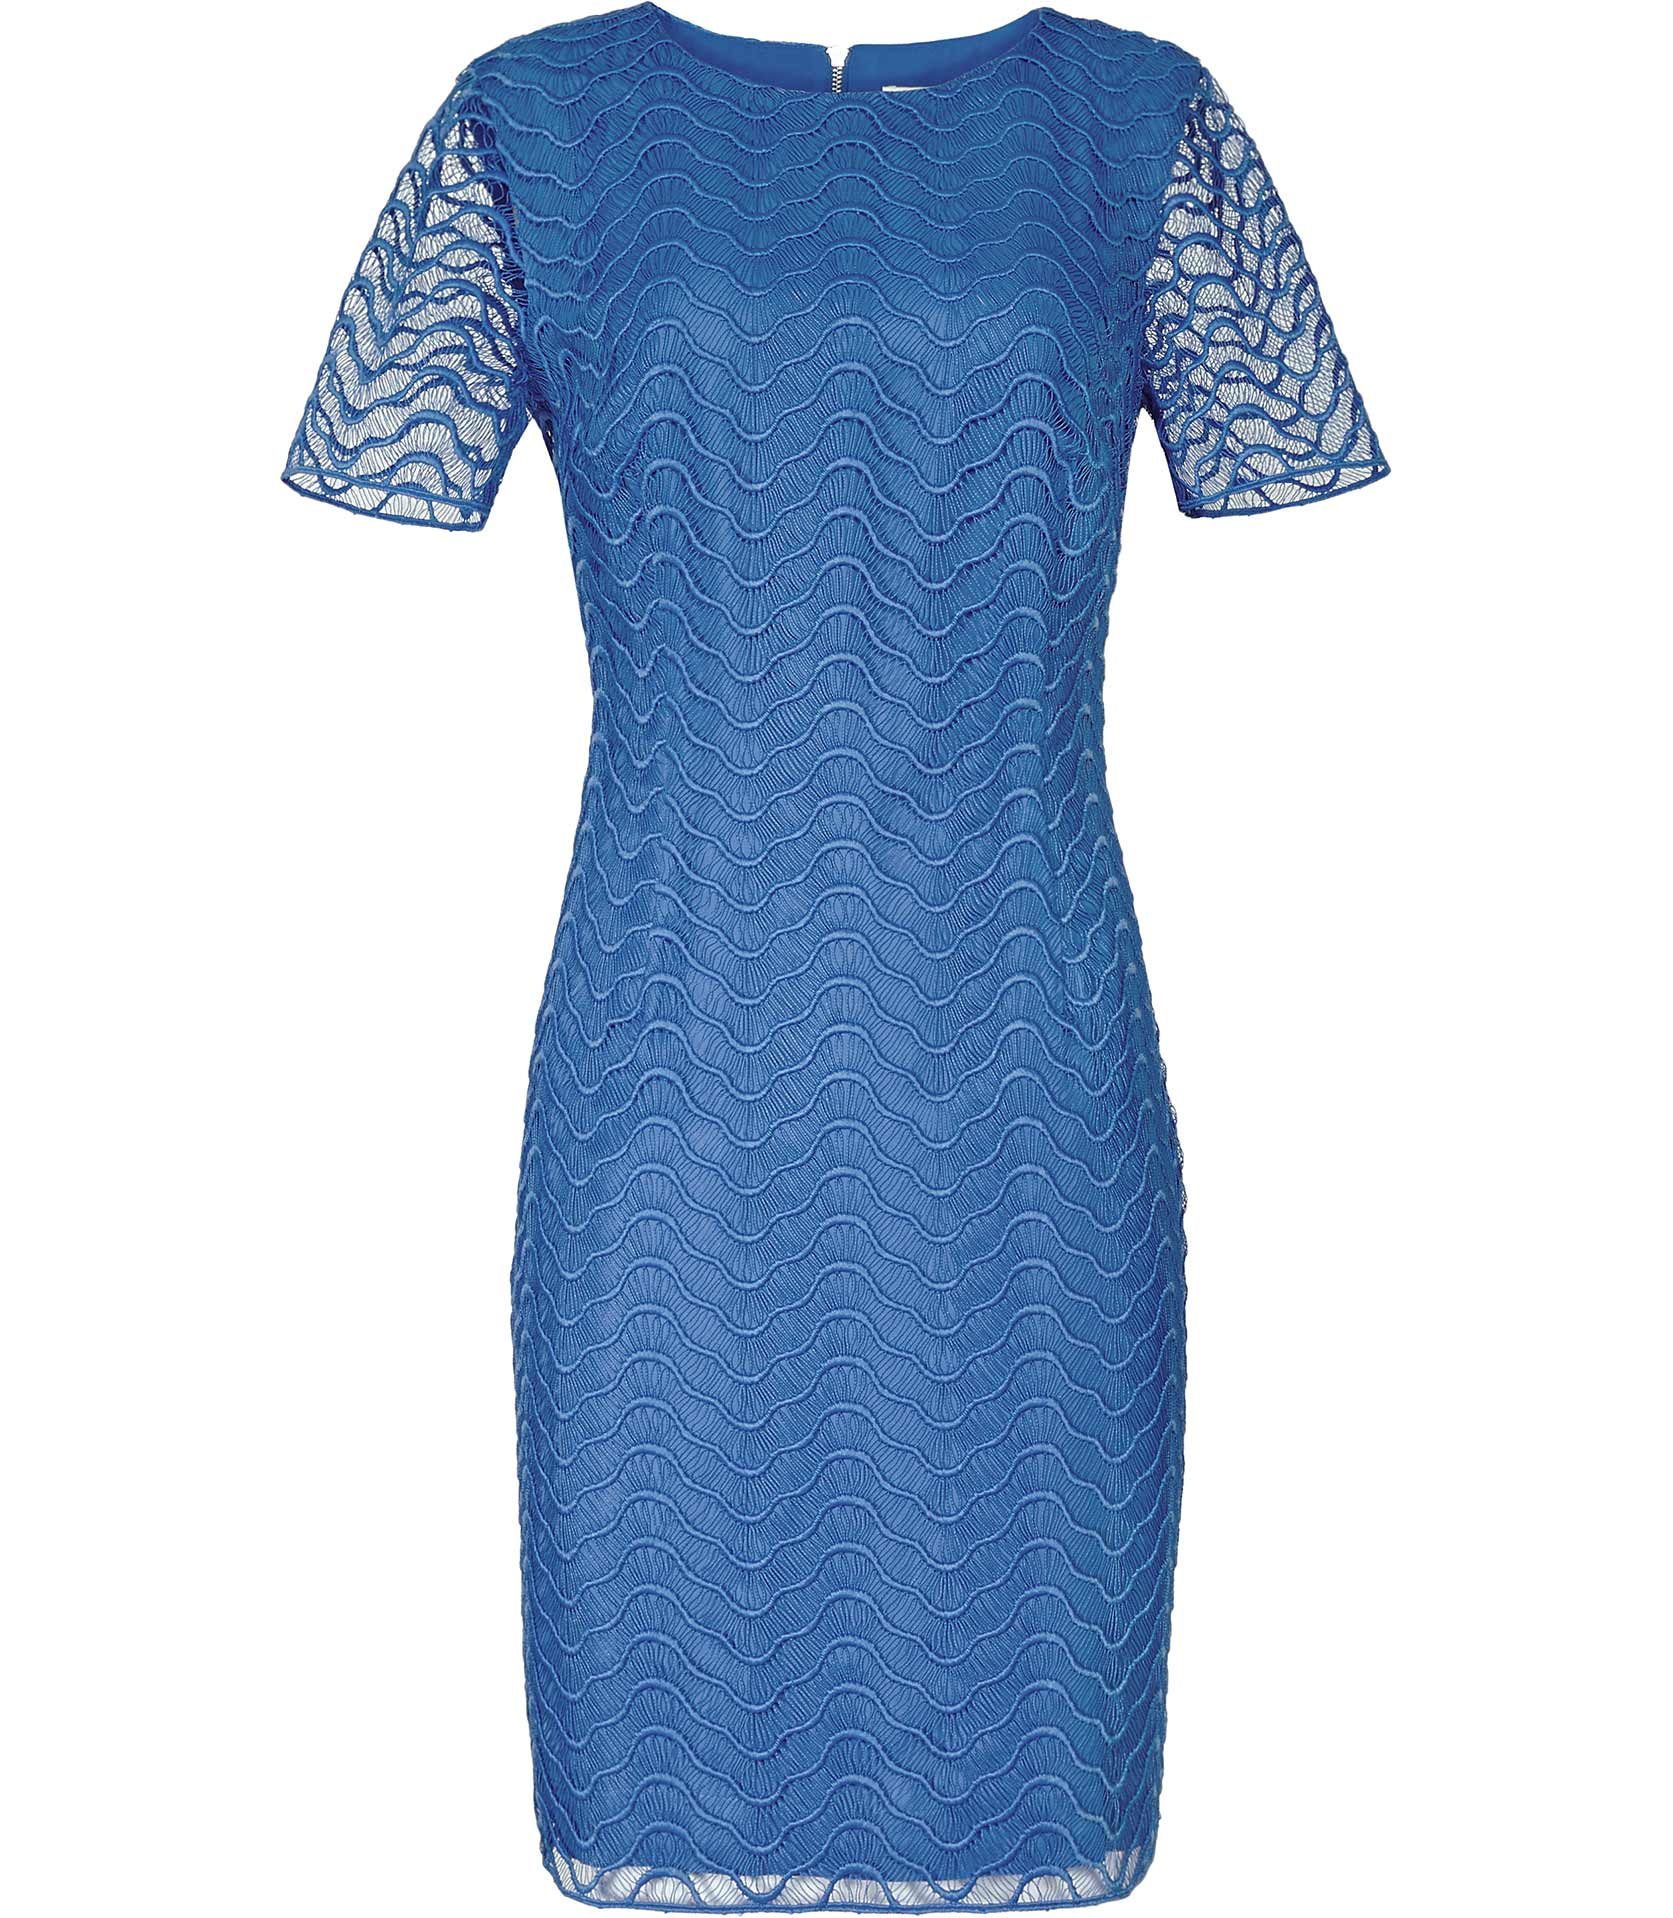 Reiss Larkies Lace Overlay Dress in Bright Blue (Blue) - Lyst